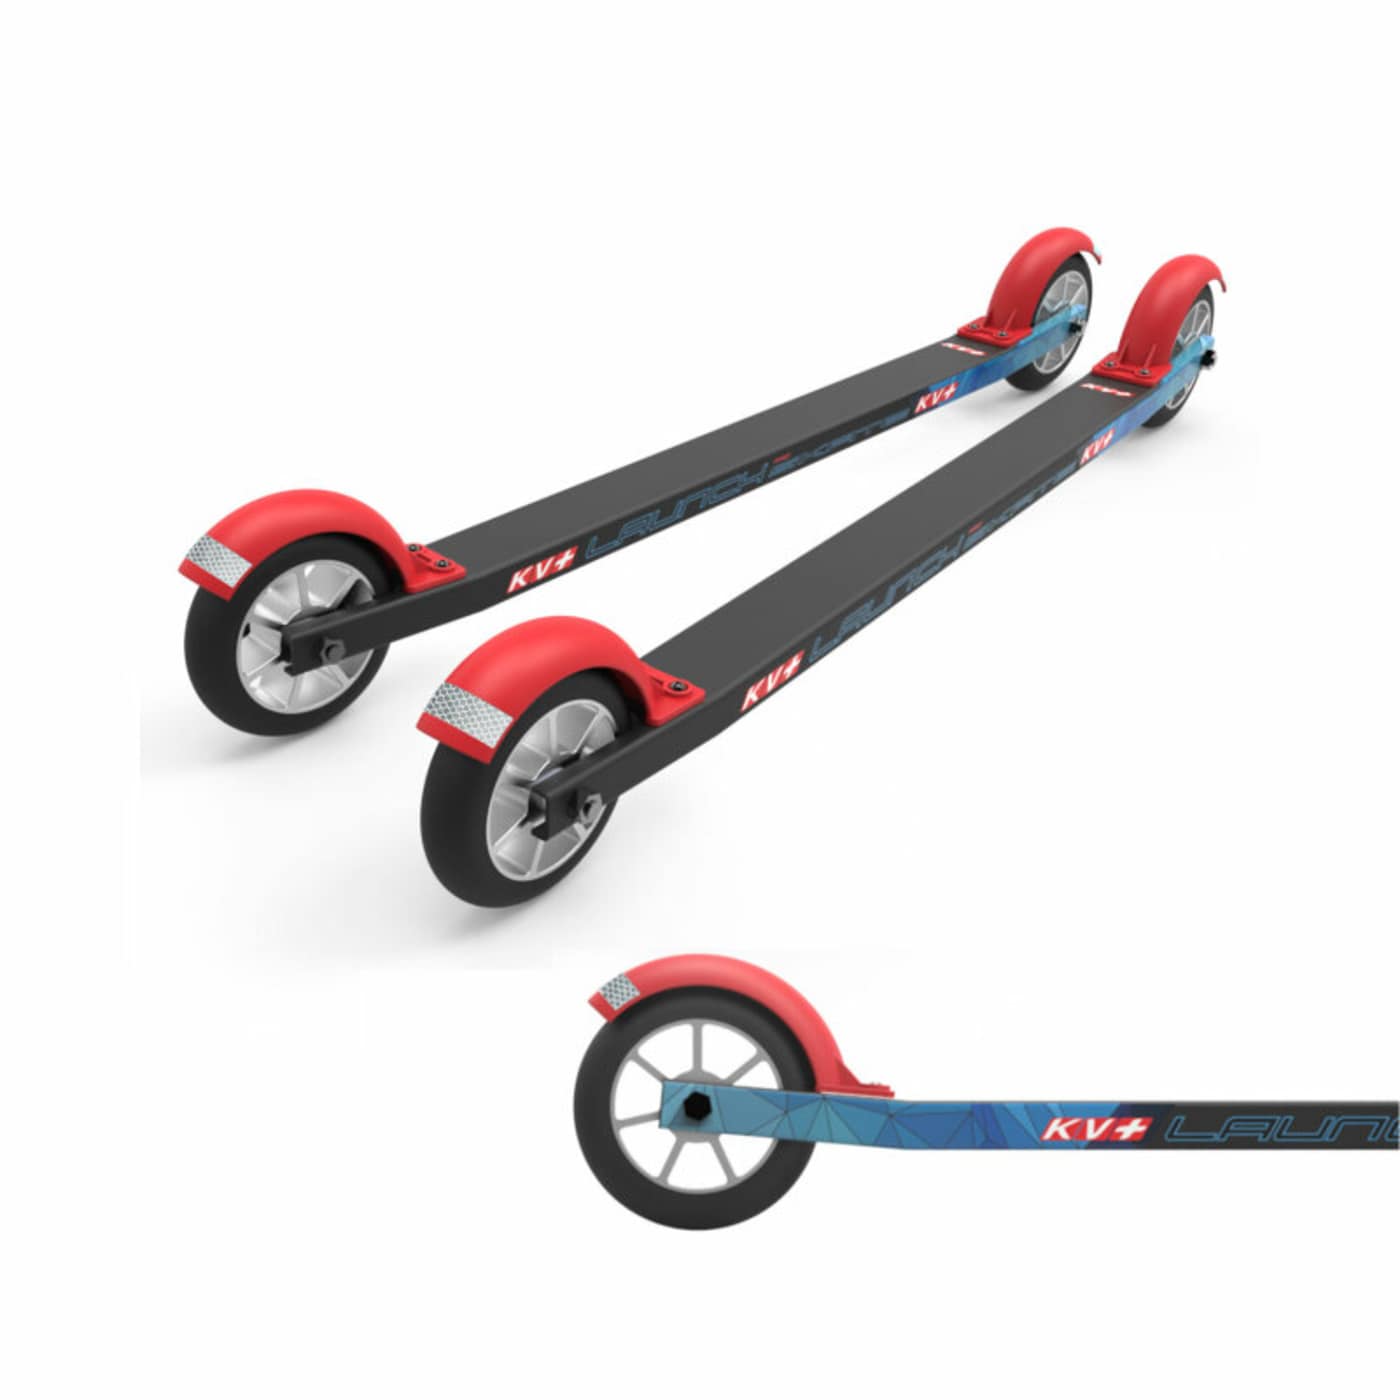 KV+ Launch Pro Skate Curved